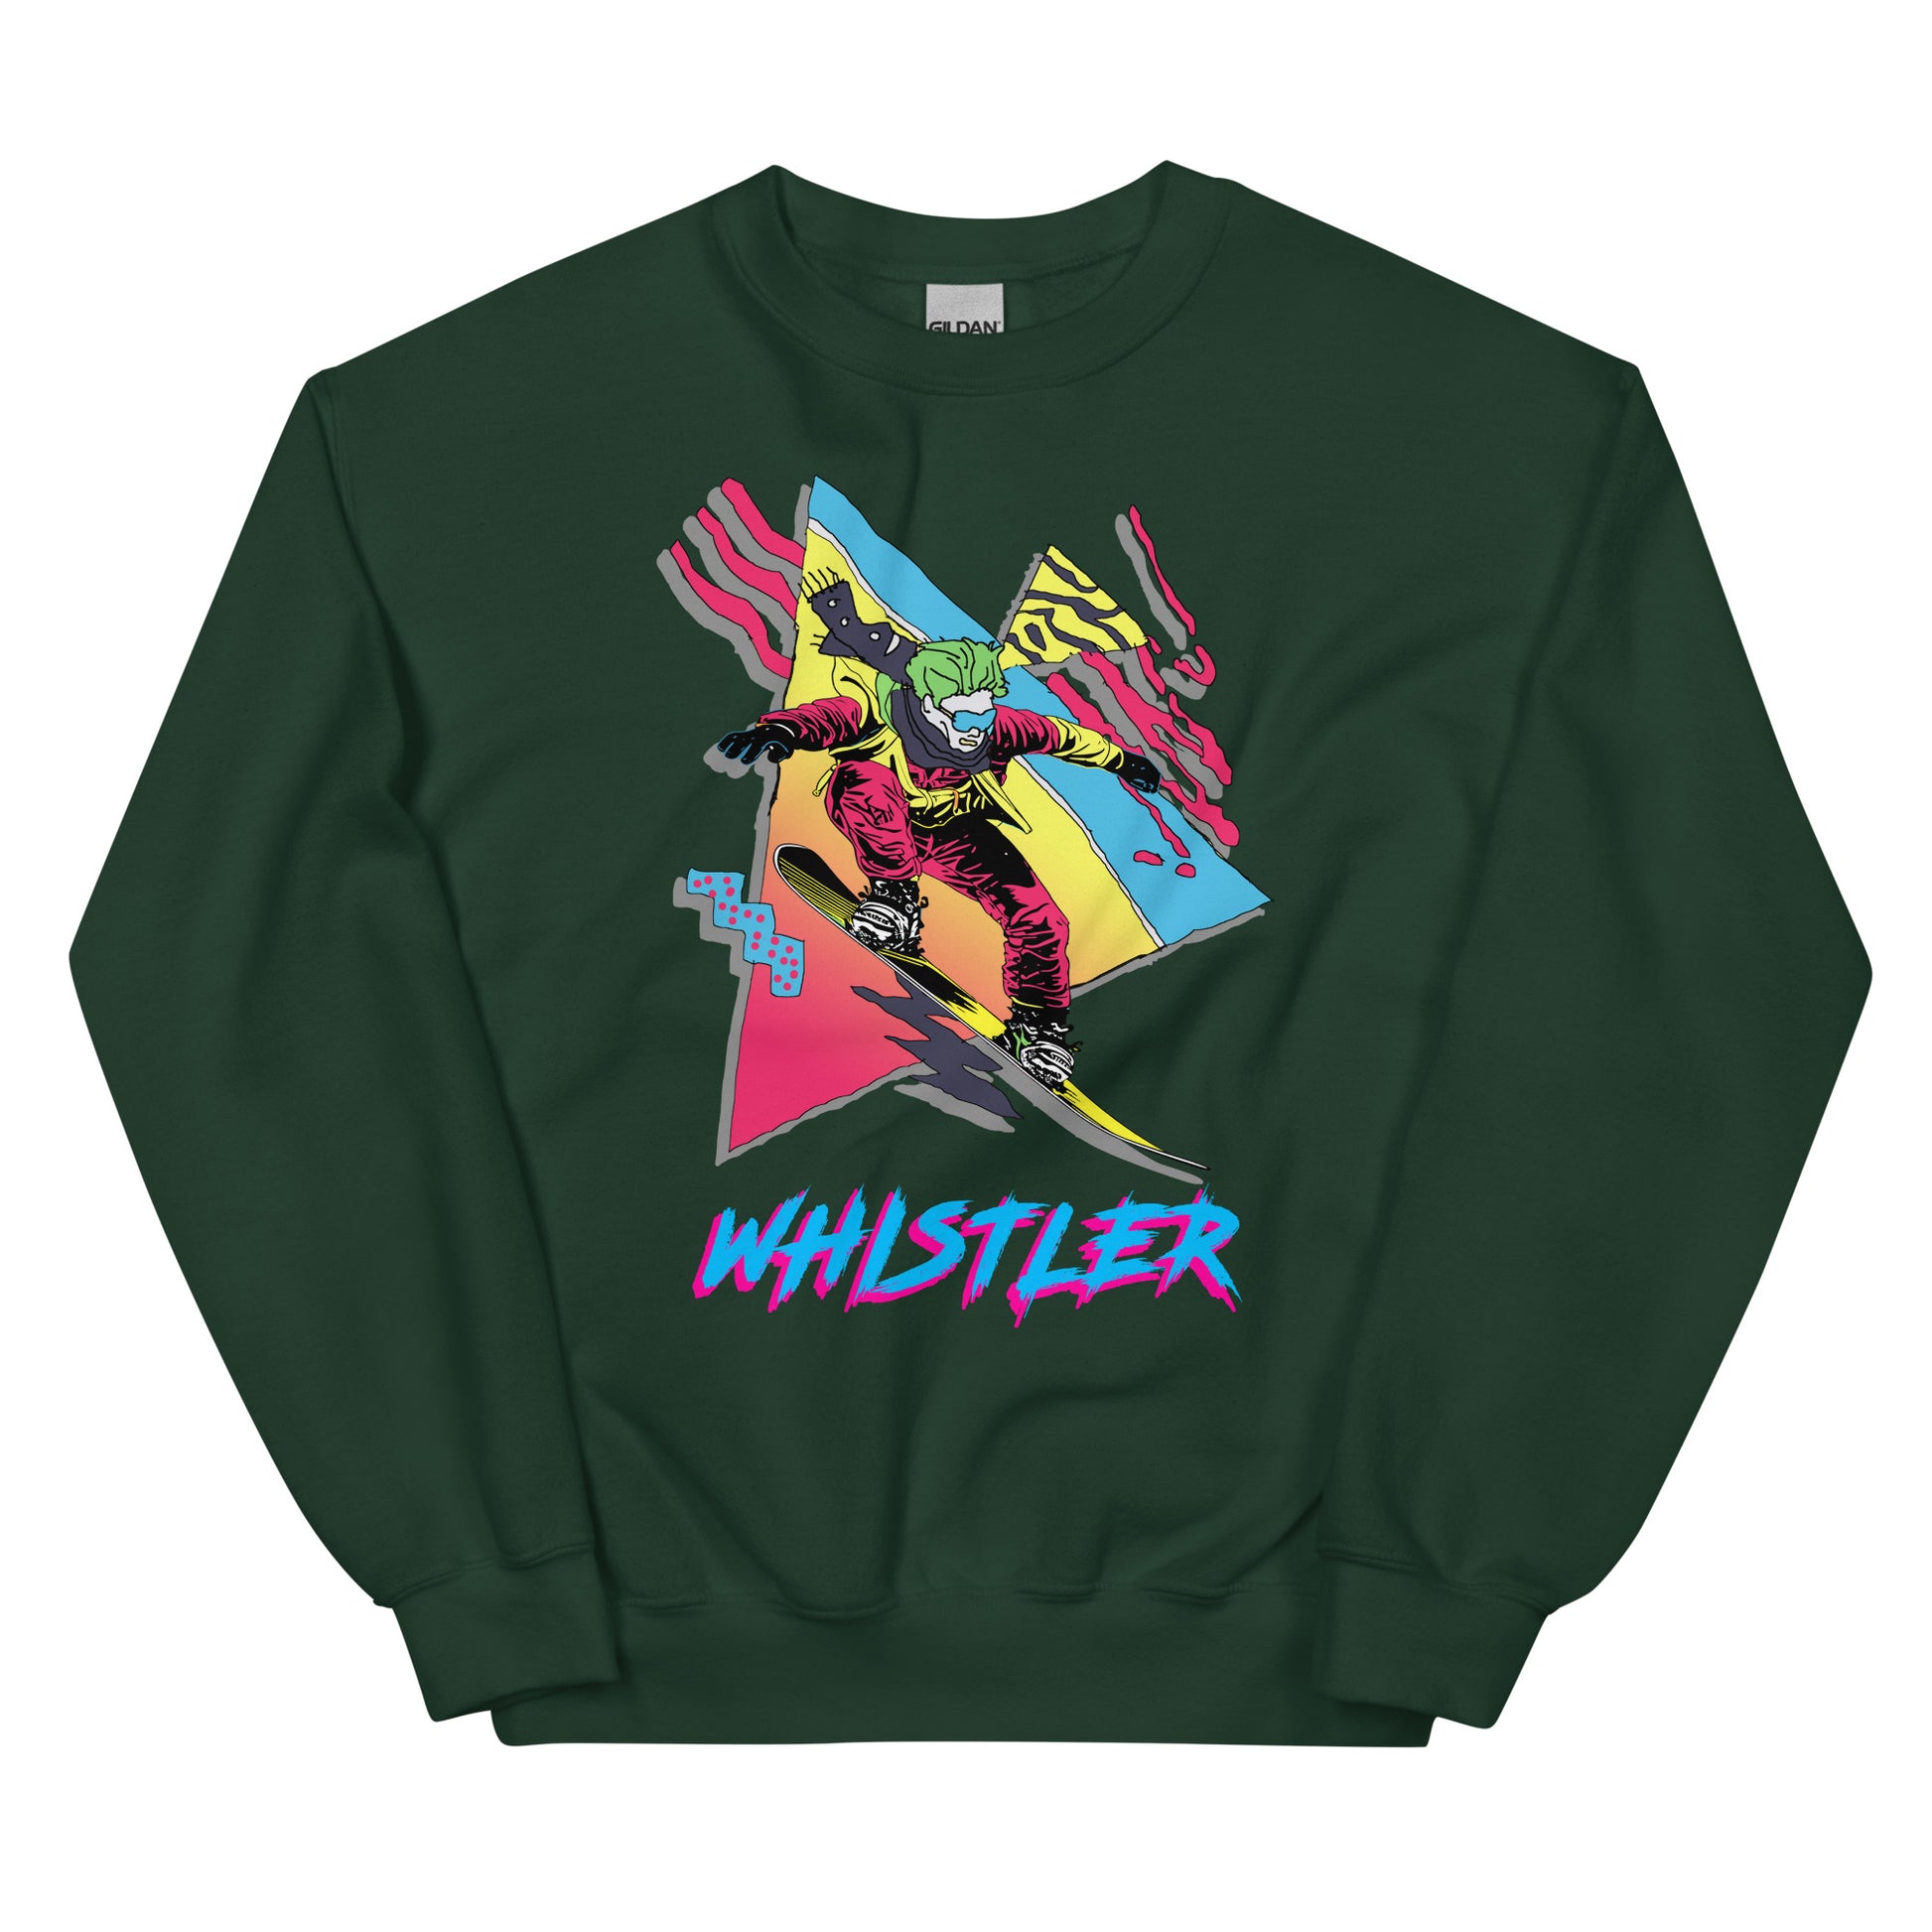 Whistler Retro Snowboarder printed crewneck by Whistler Shirts